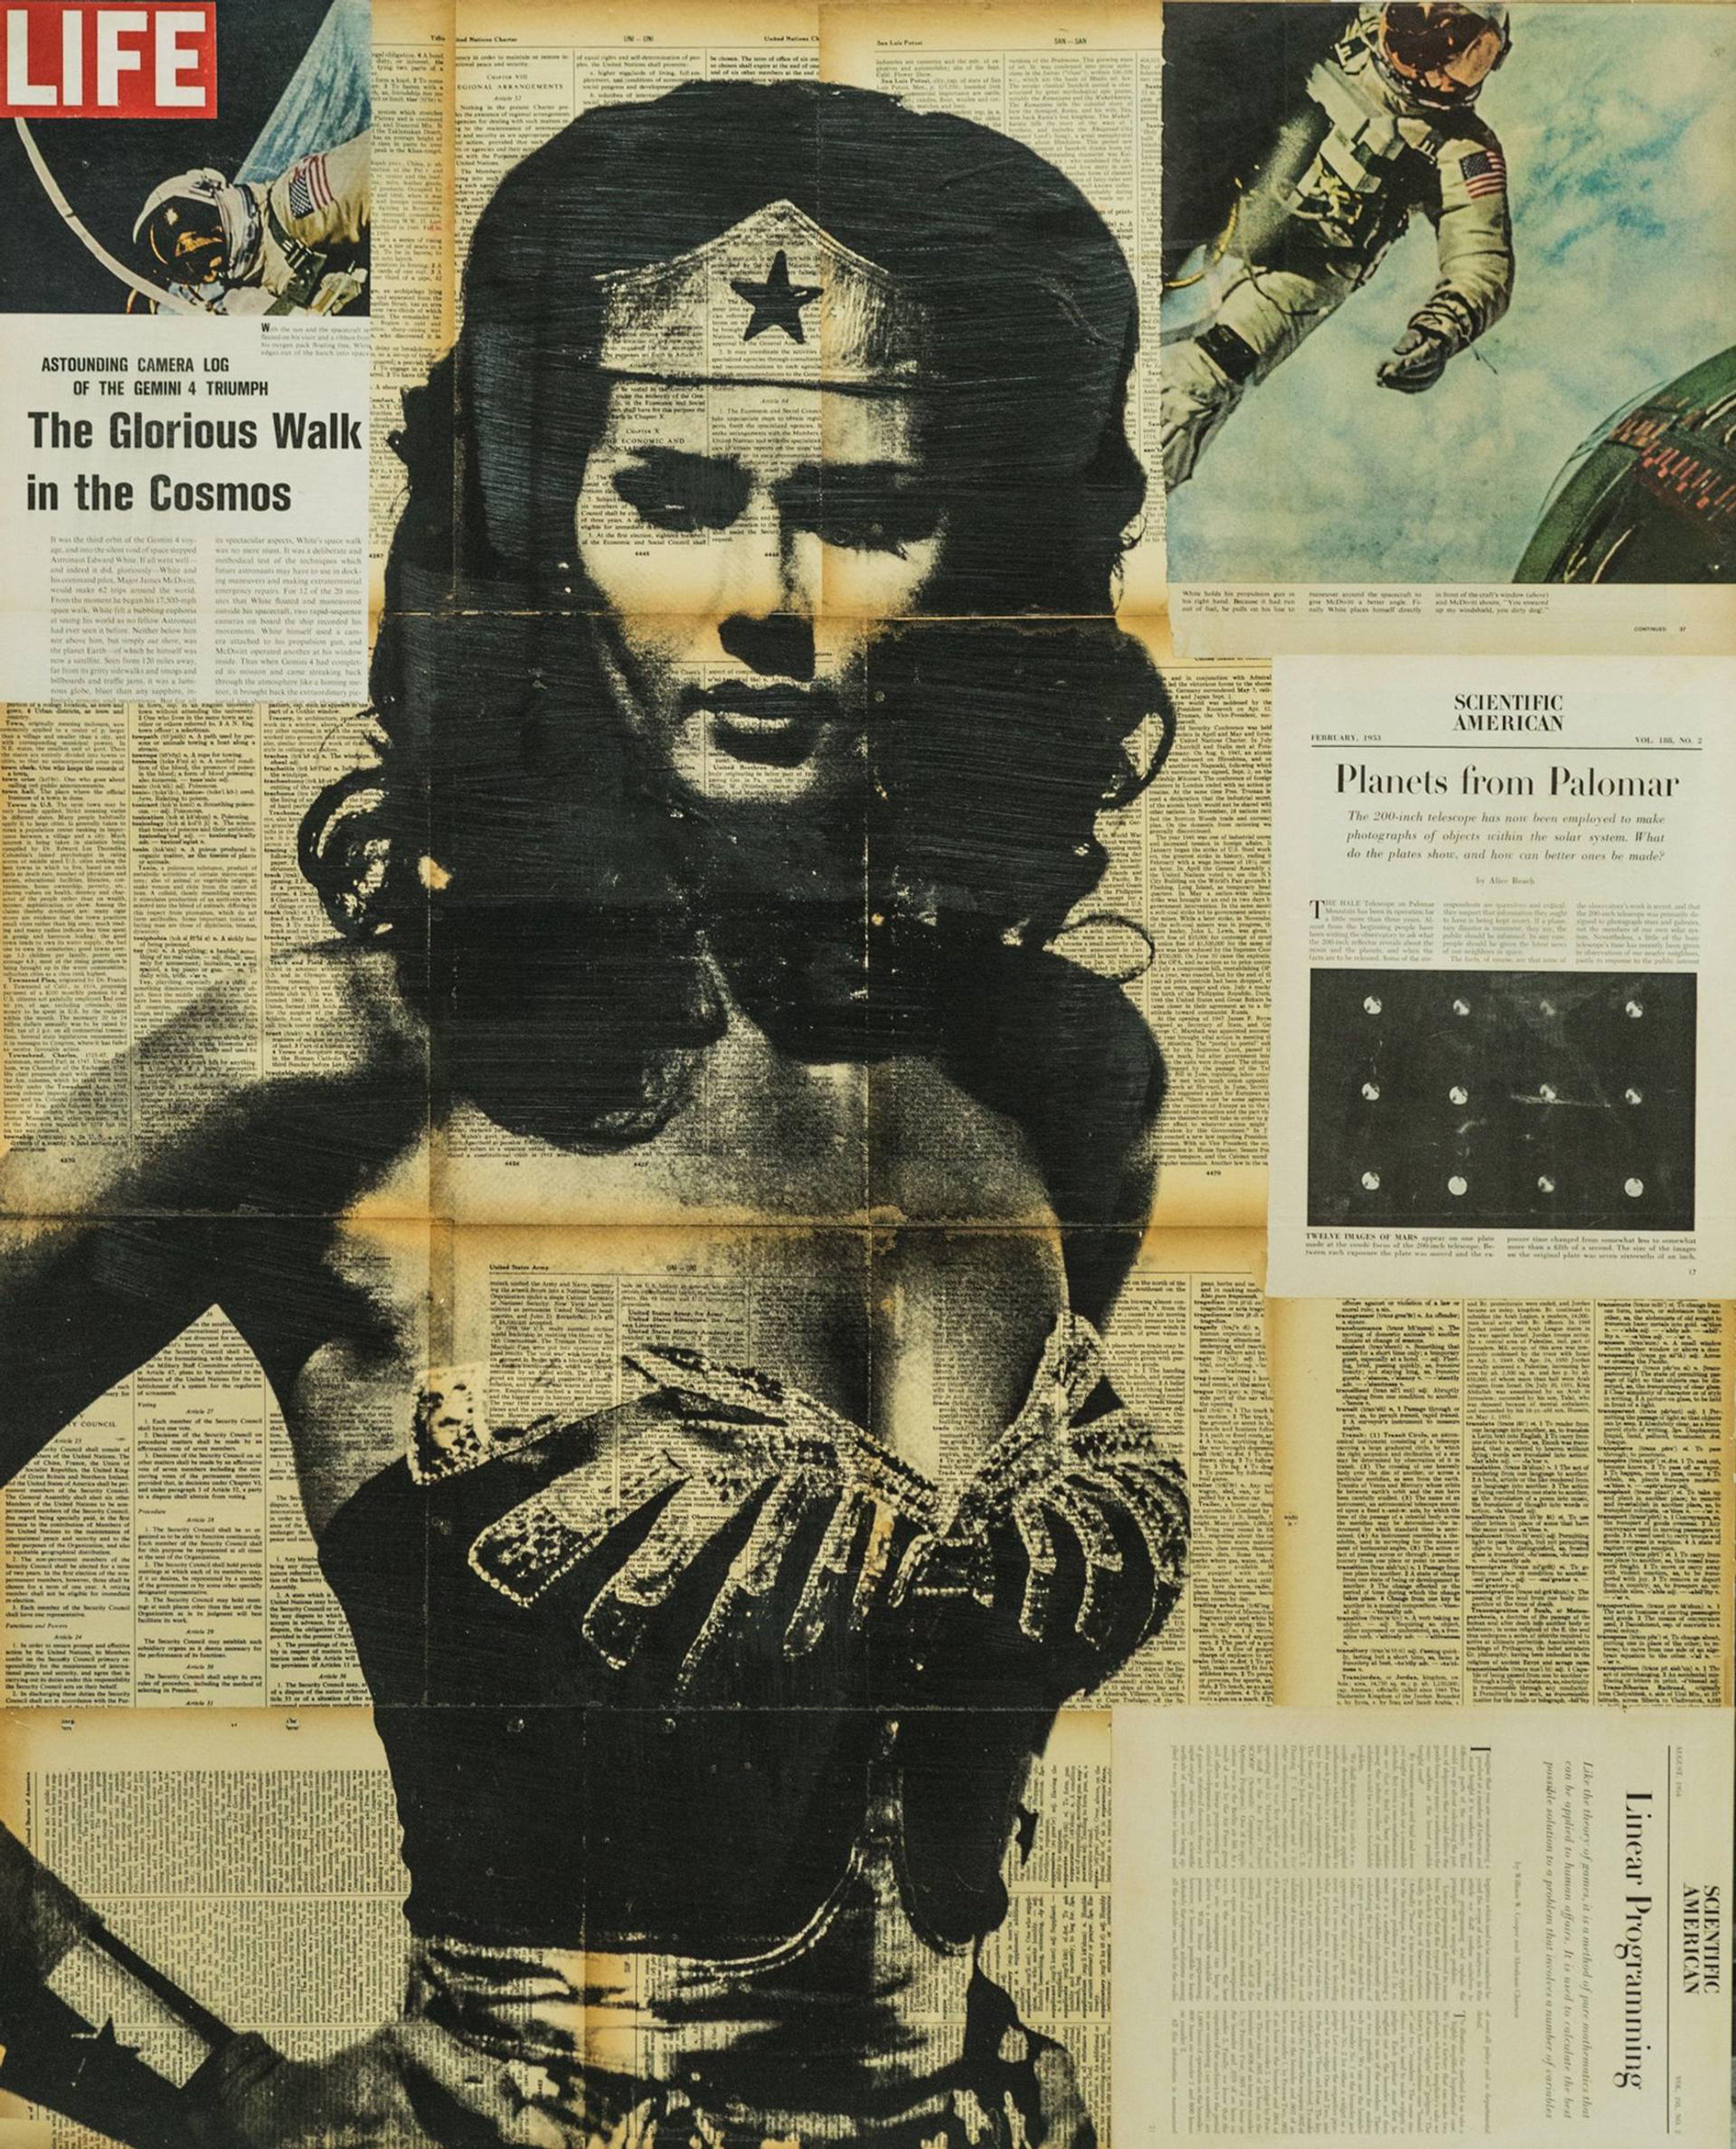 Wonder Woman, Mixed Media on Wood Panel - Mixed Media Art by Dane Shue